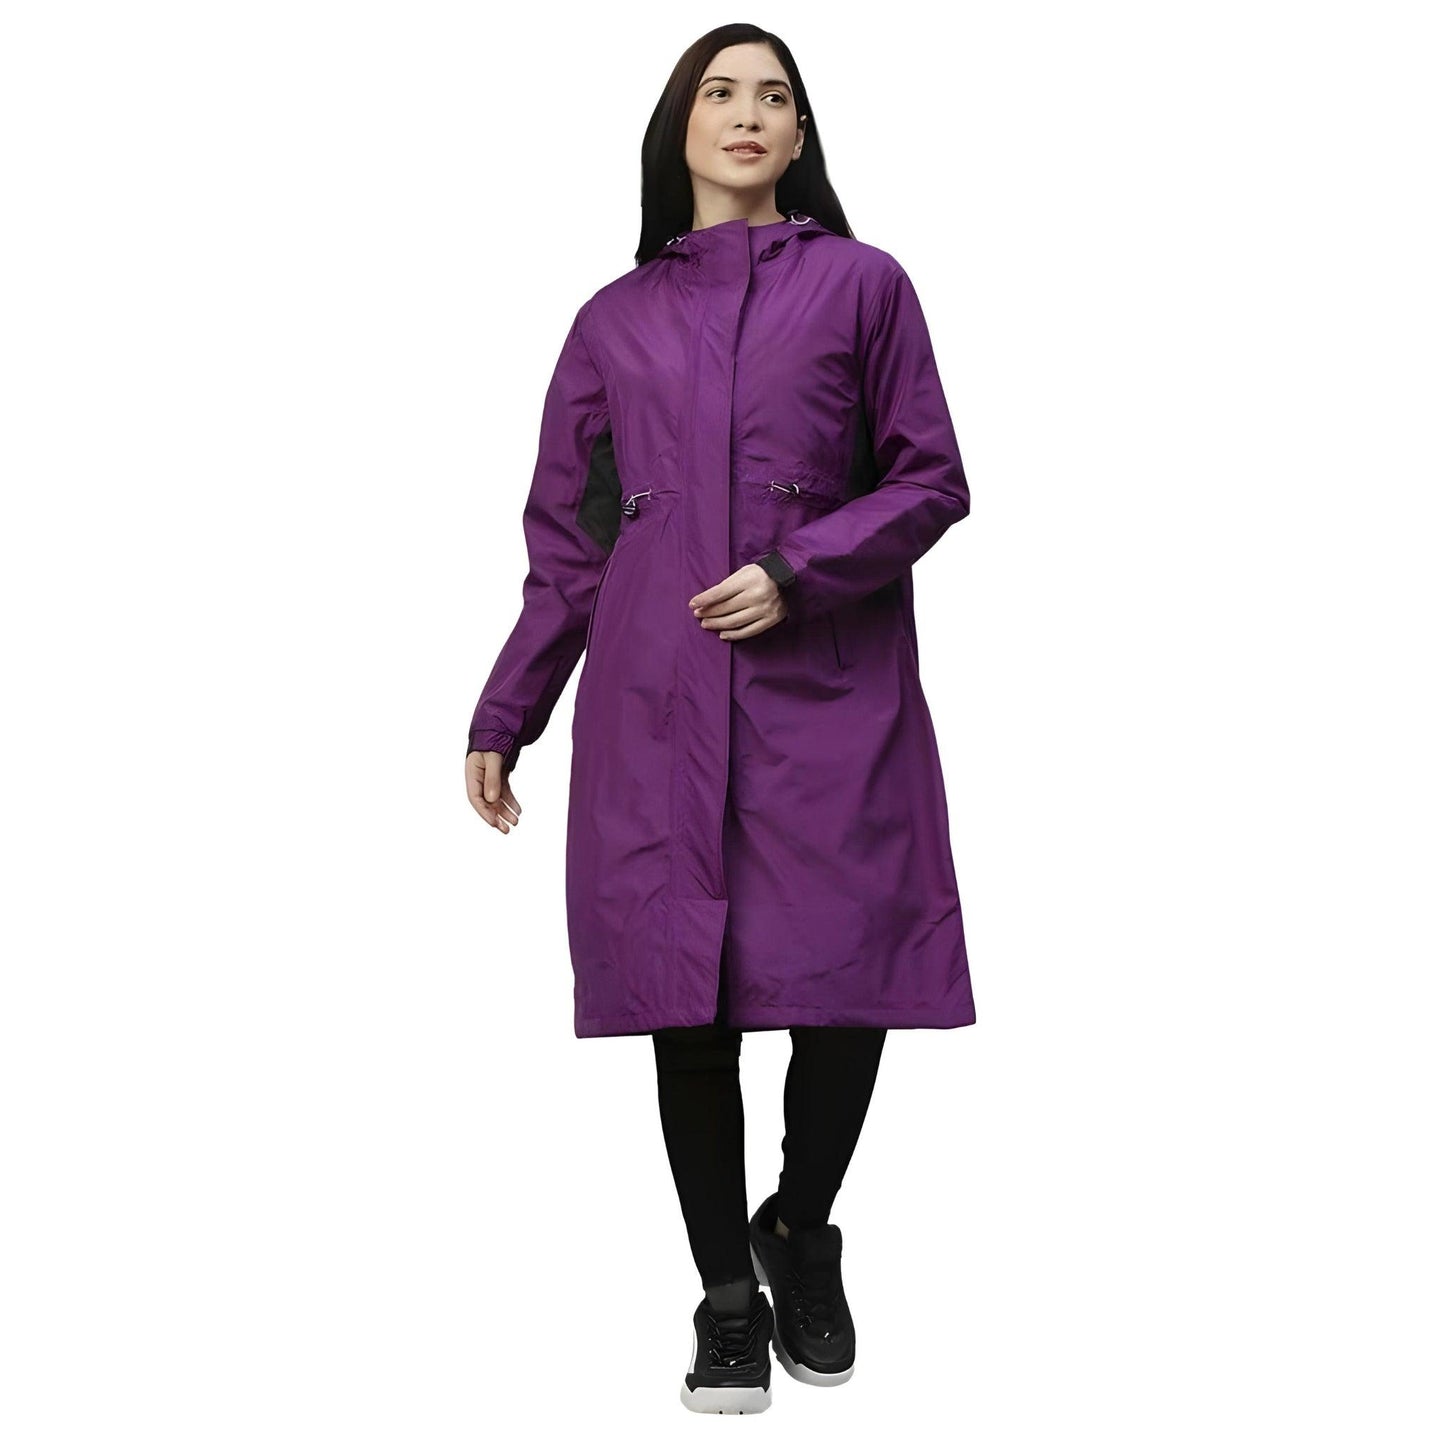 YOUTH ROBE Women's Knee-length Solid Raincoat (Dark Purple) - YOUTH ROBE